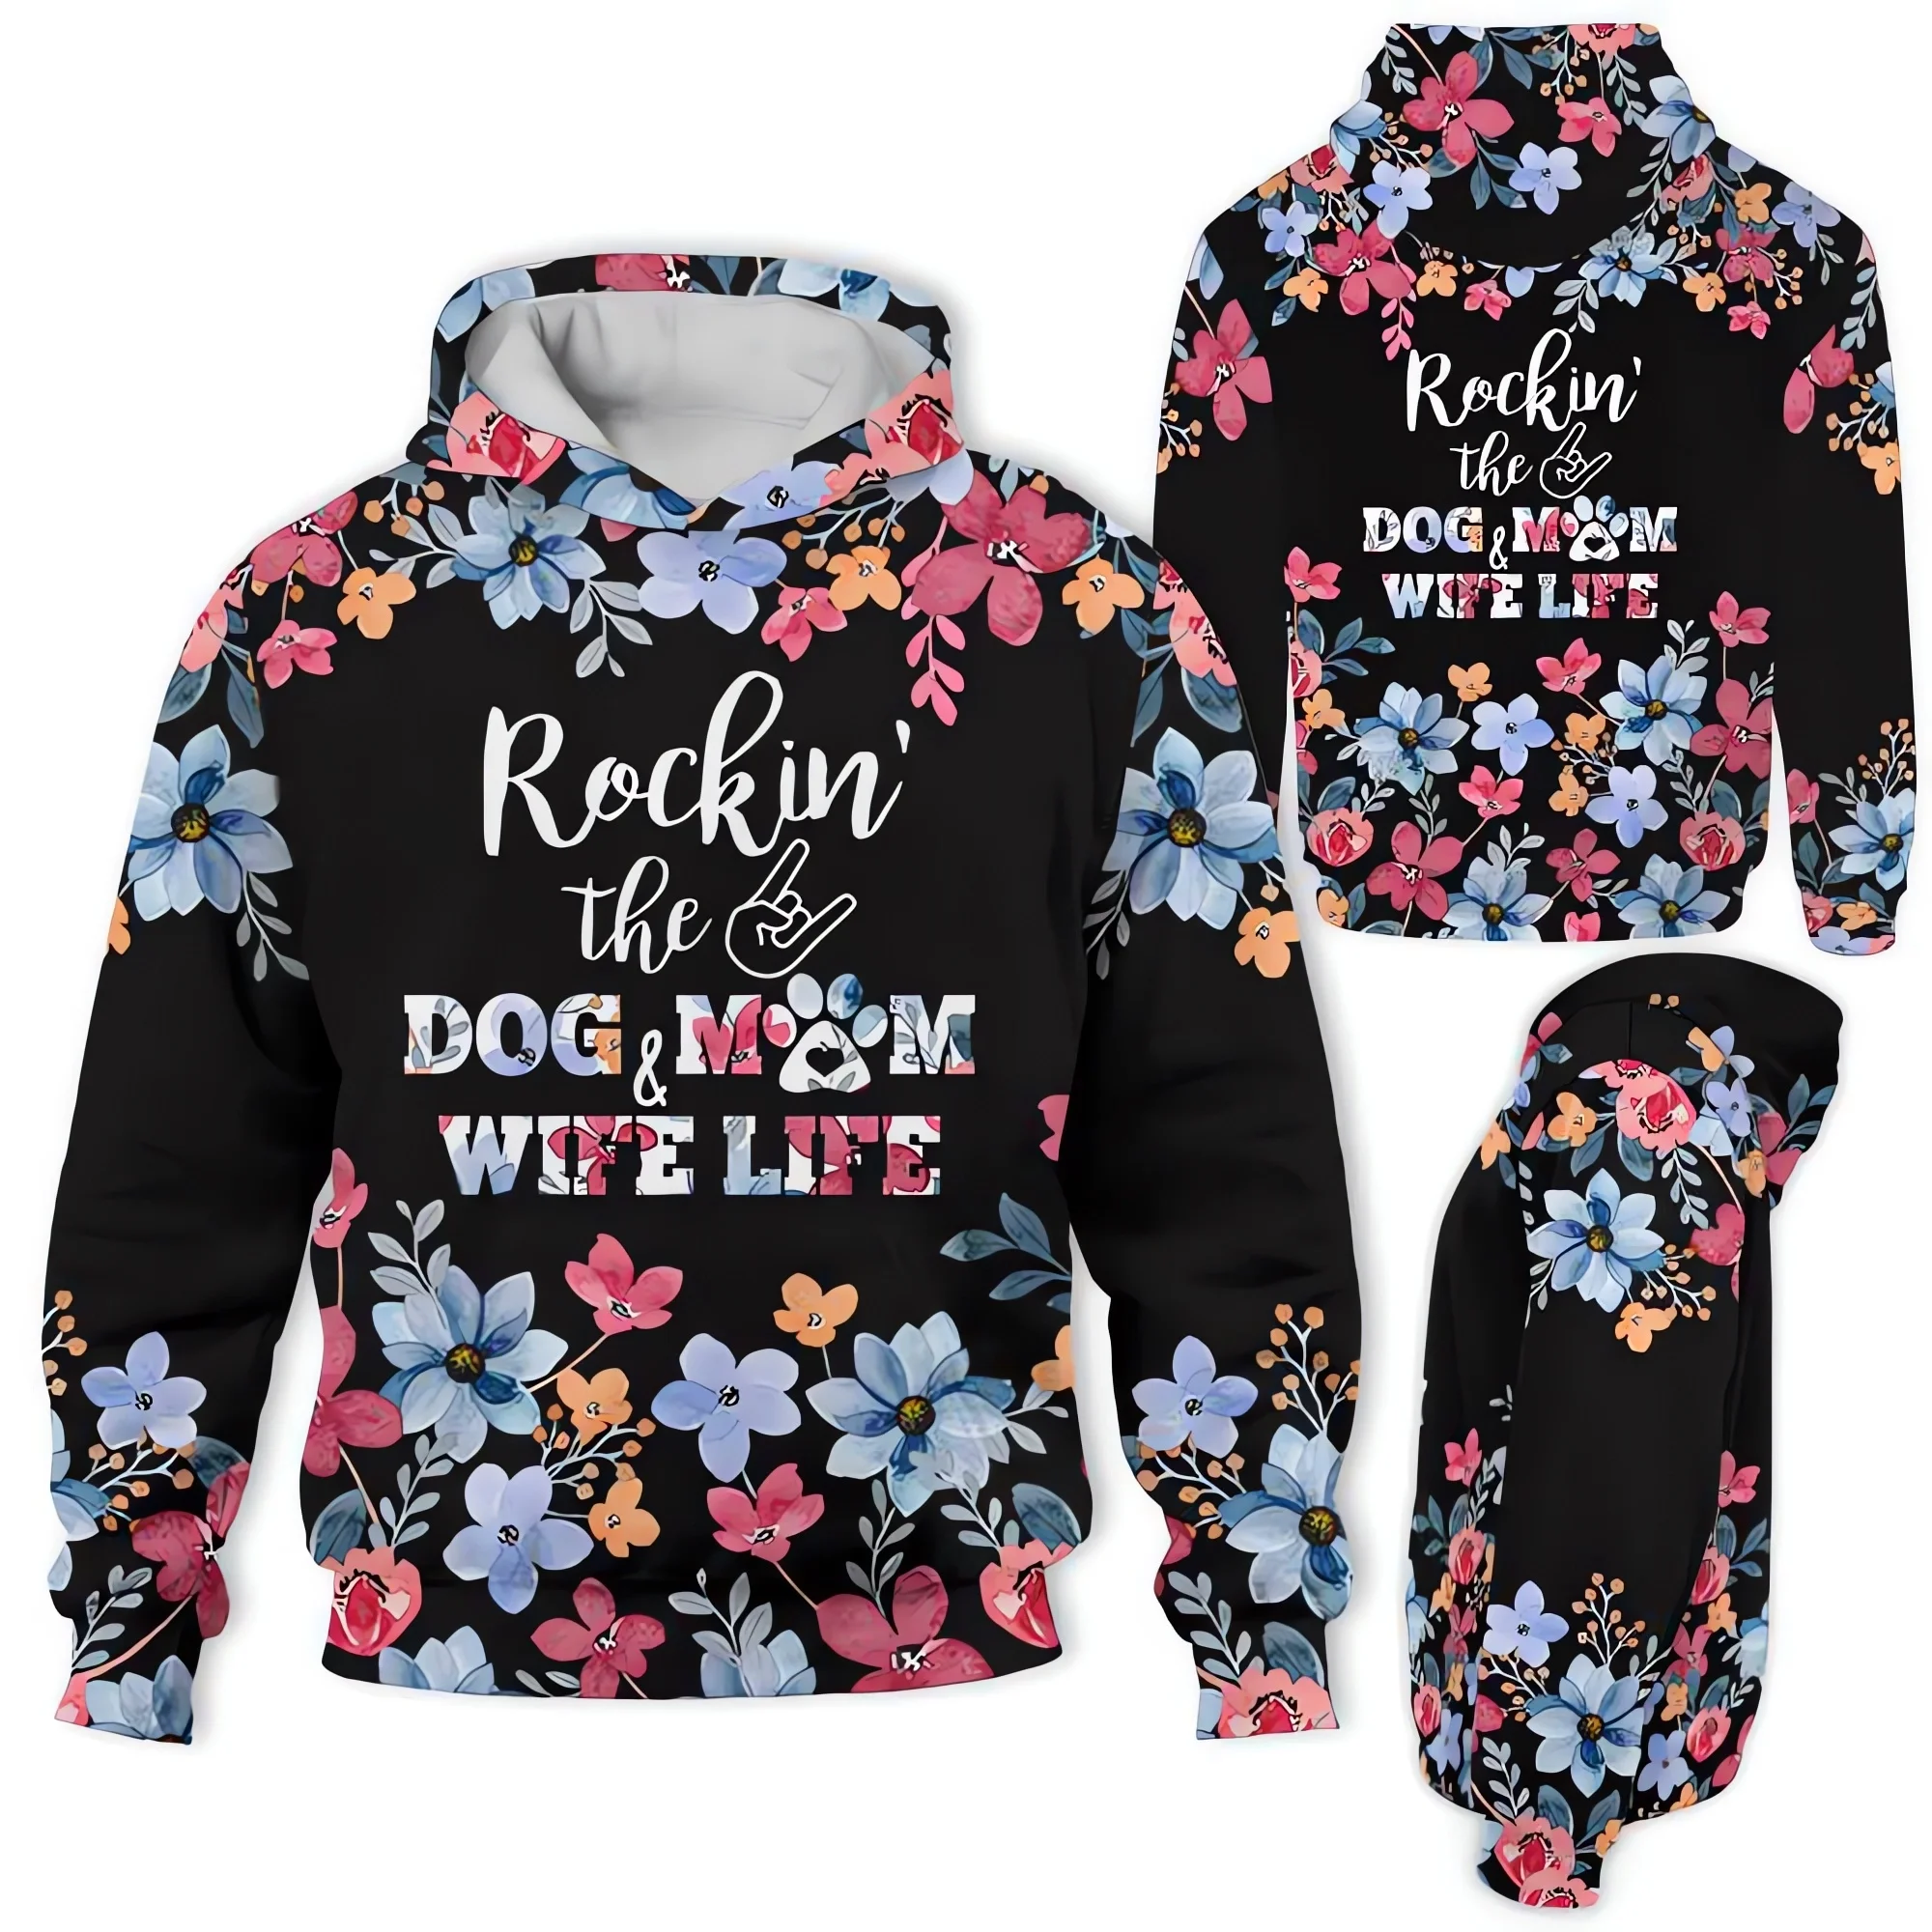 

HX Dog Flower Rocking Hoodies Dog and Mom Wife Life Flowers 3D Printed Sweatshirts Fashion Casual Women Clothing Dropshipping